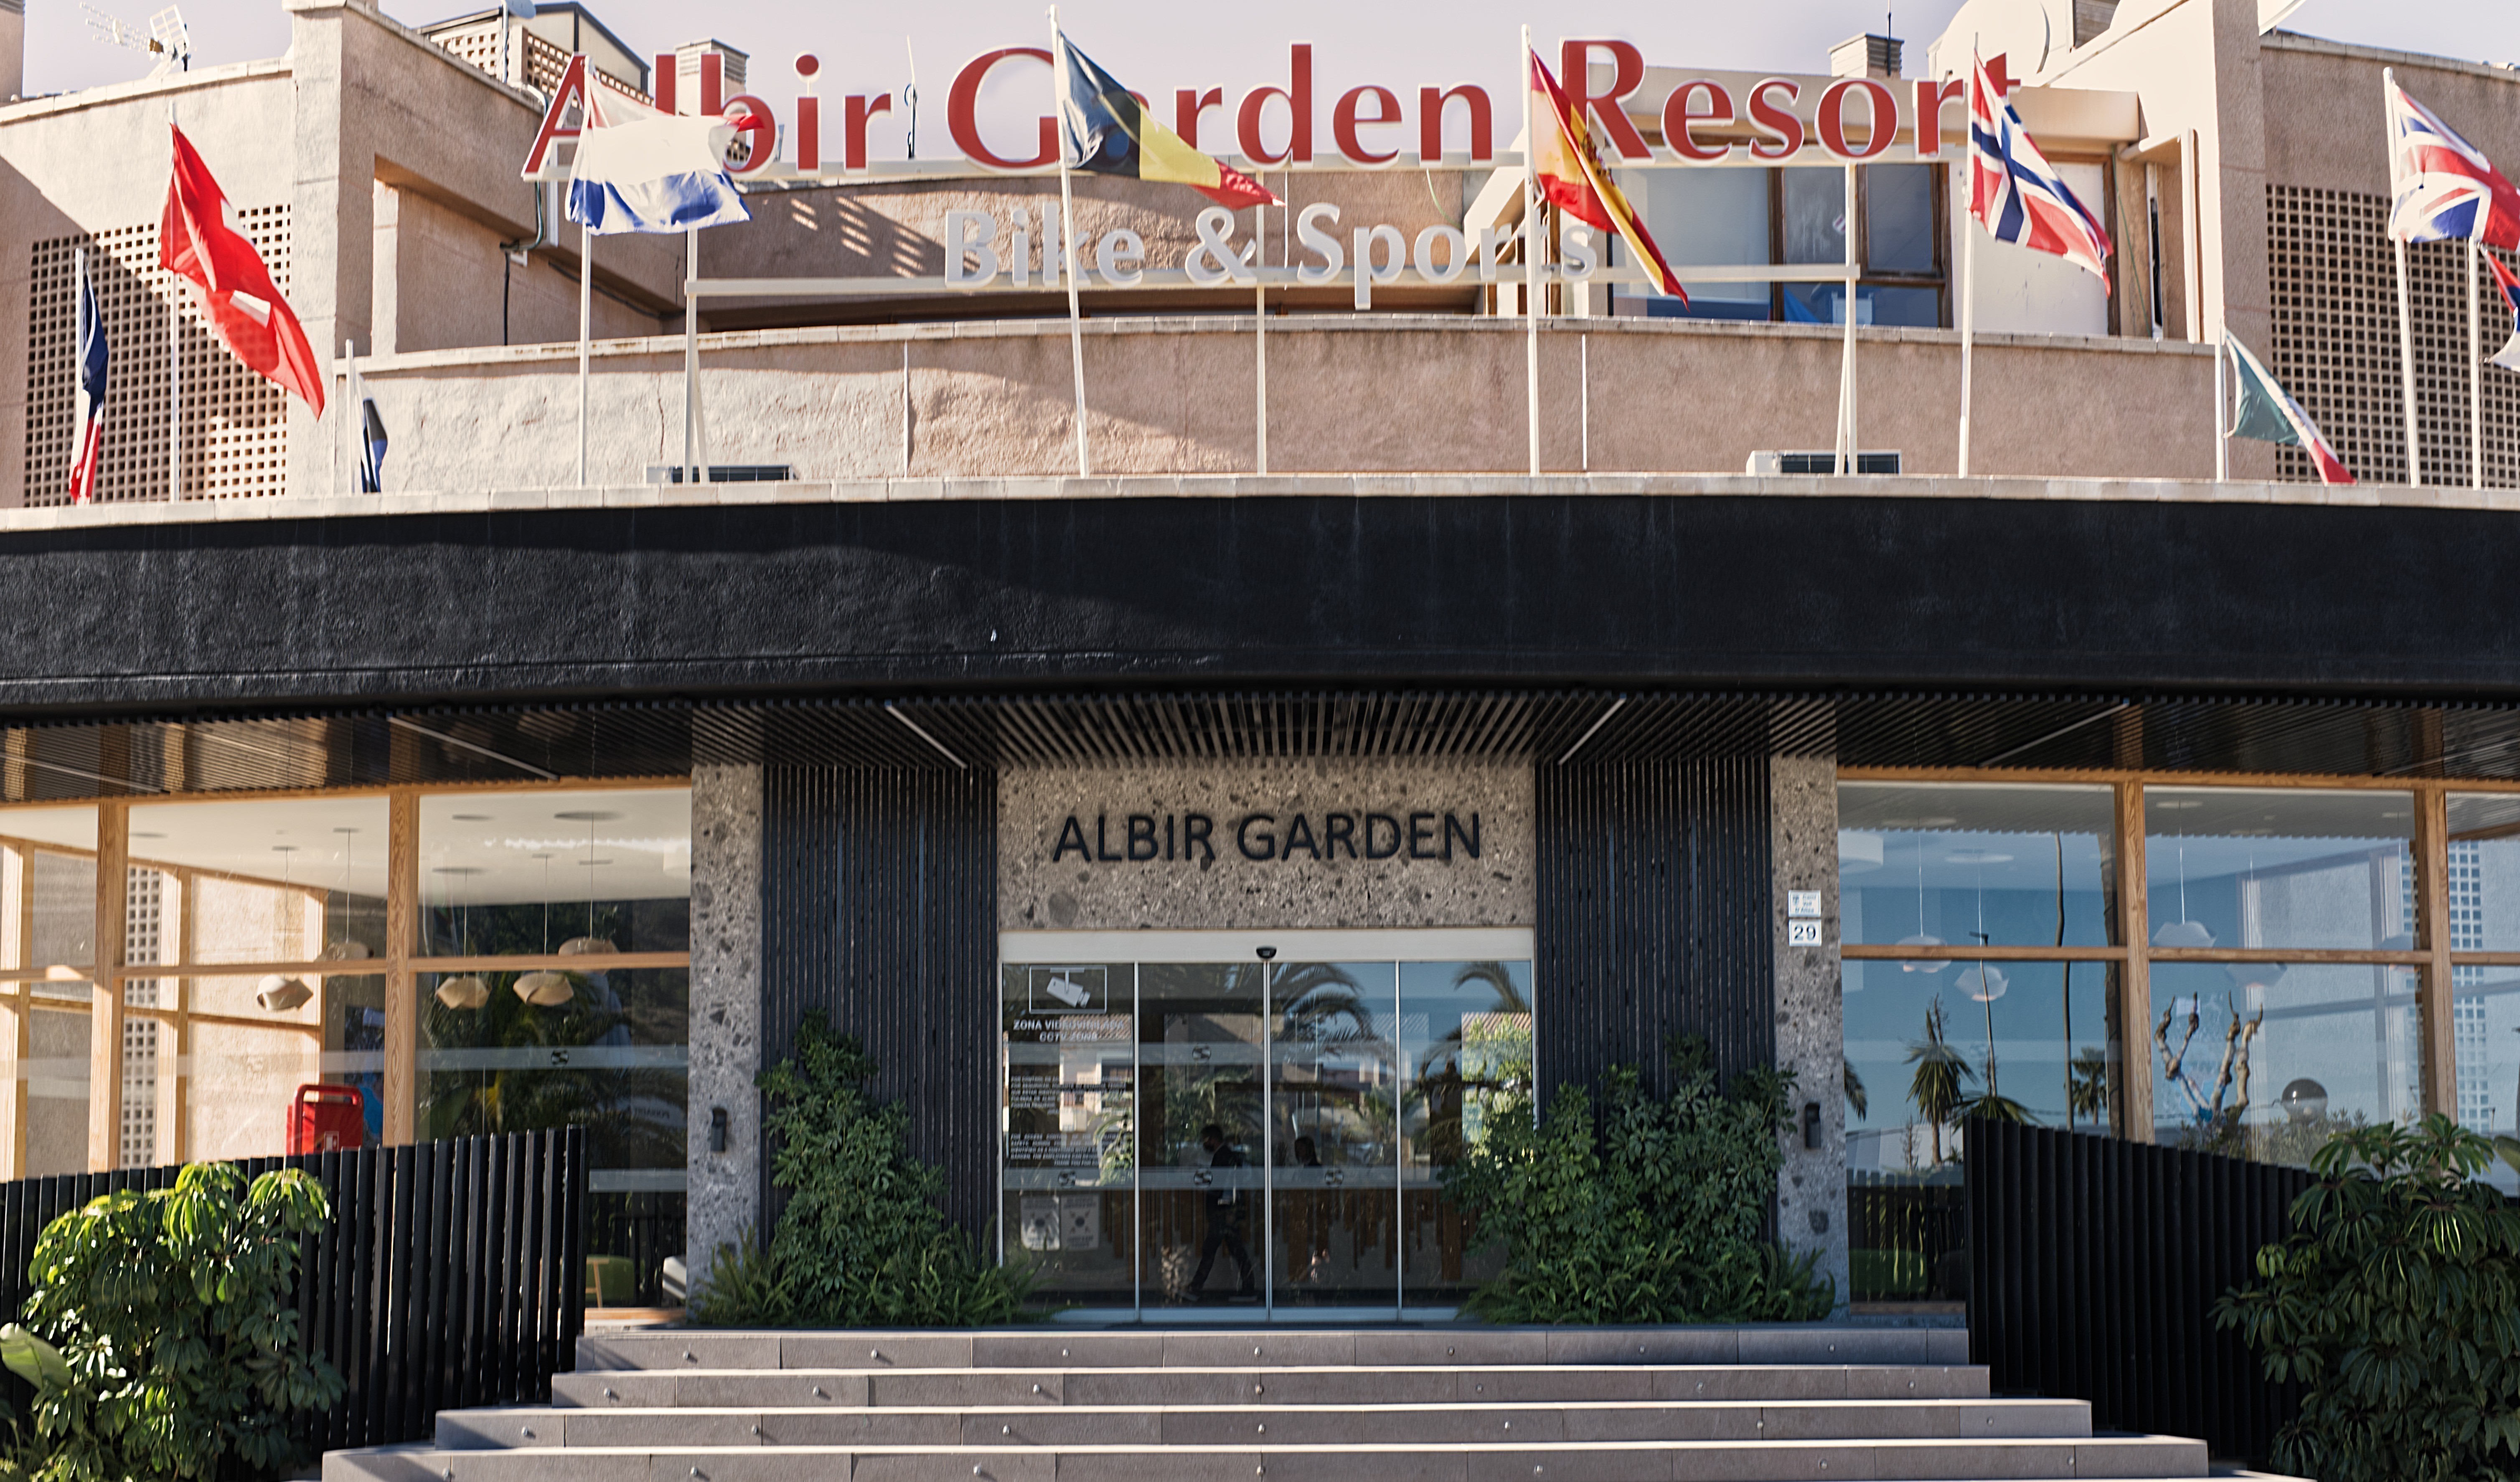 Albir Garden Resort & Sports